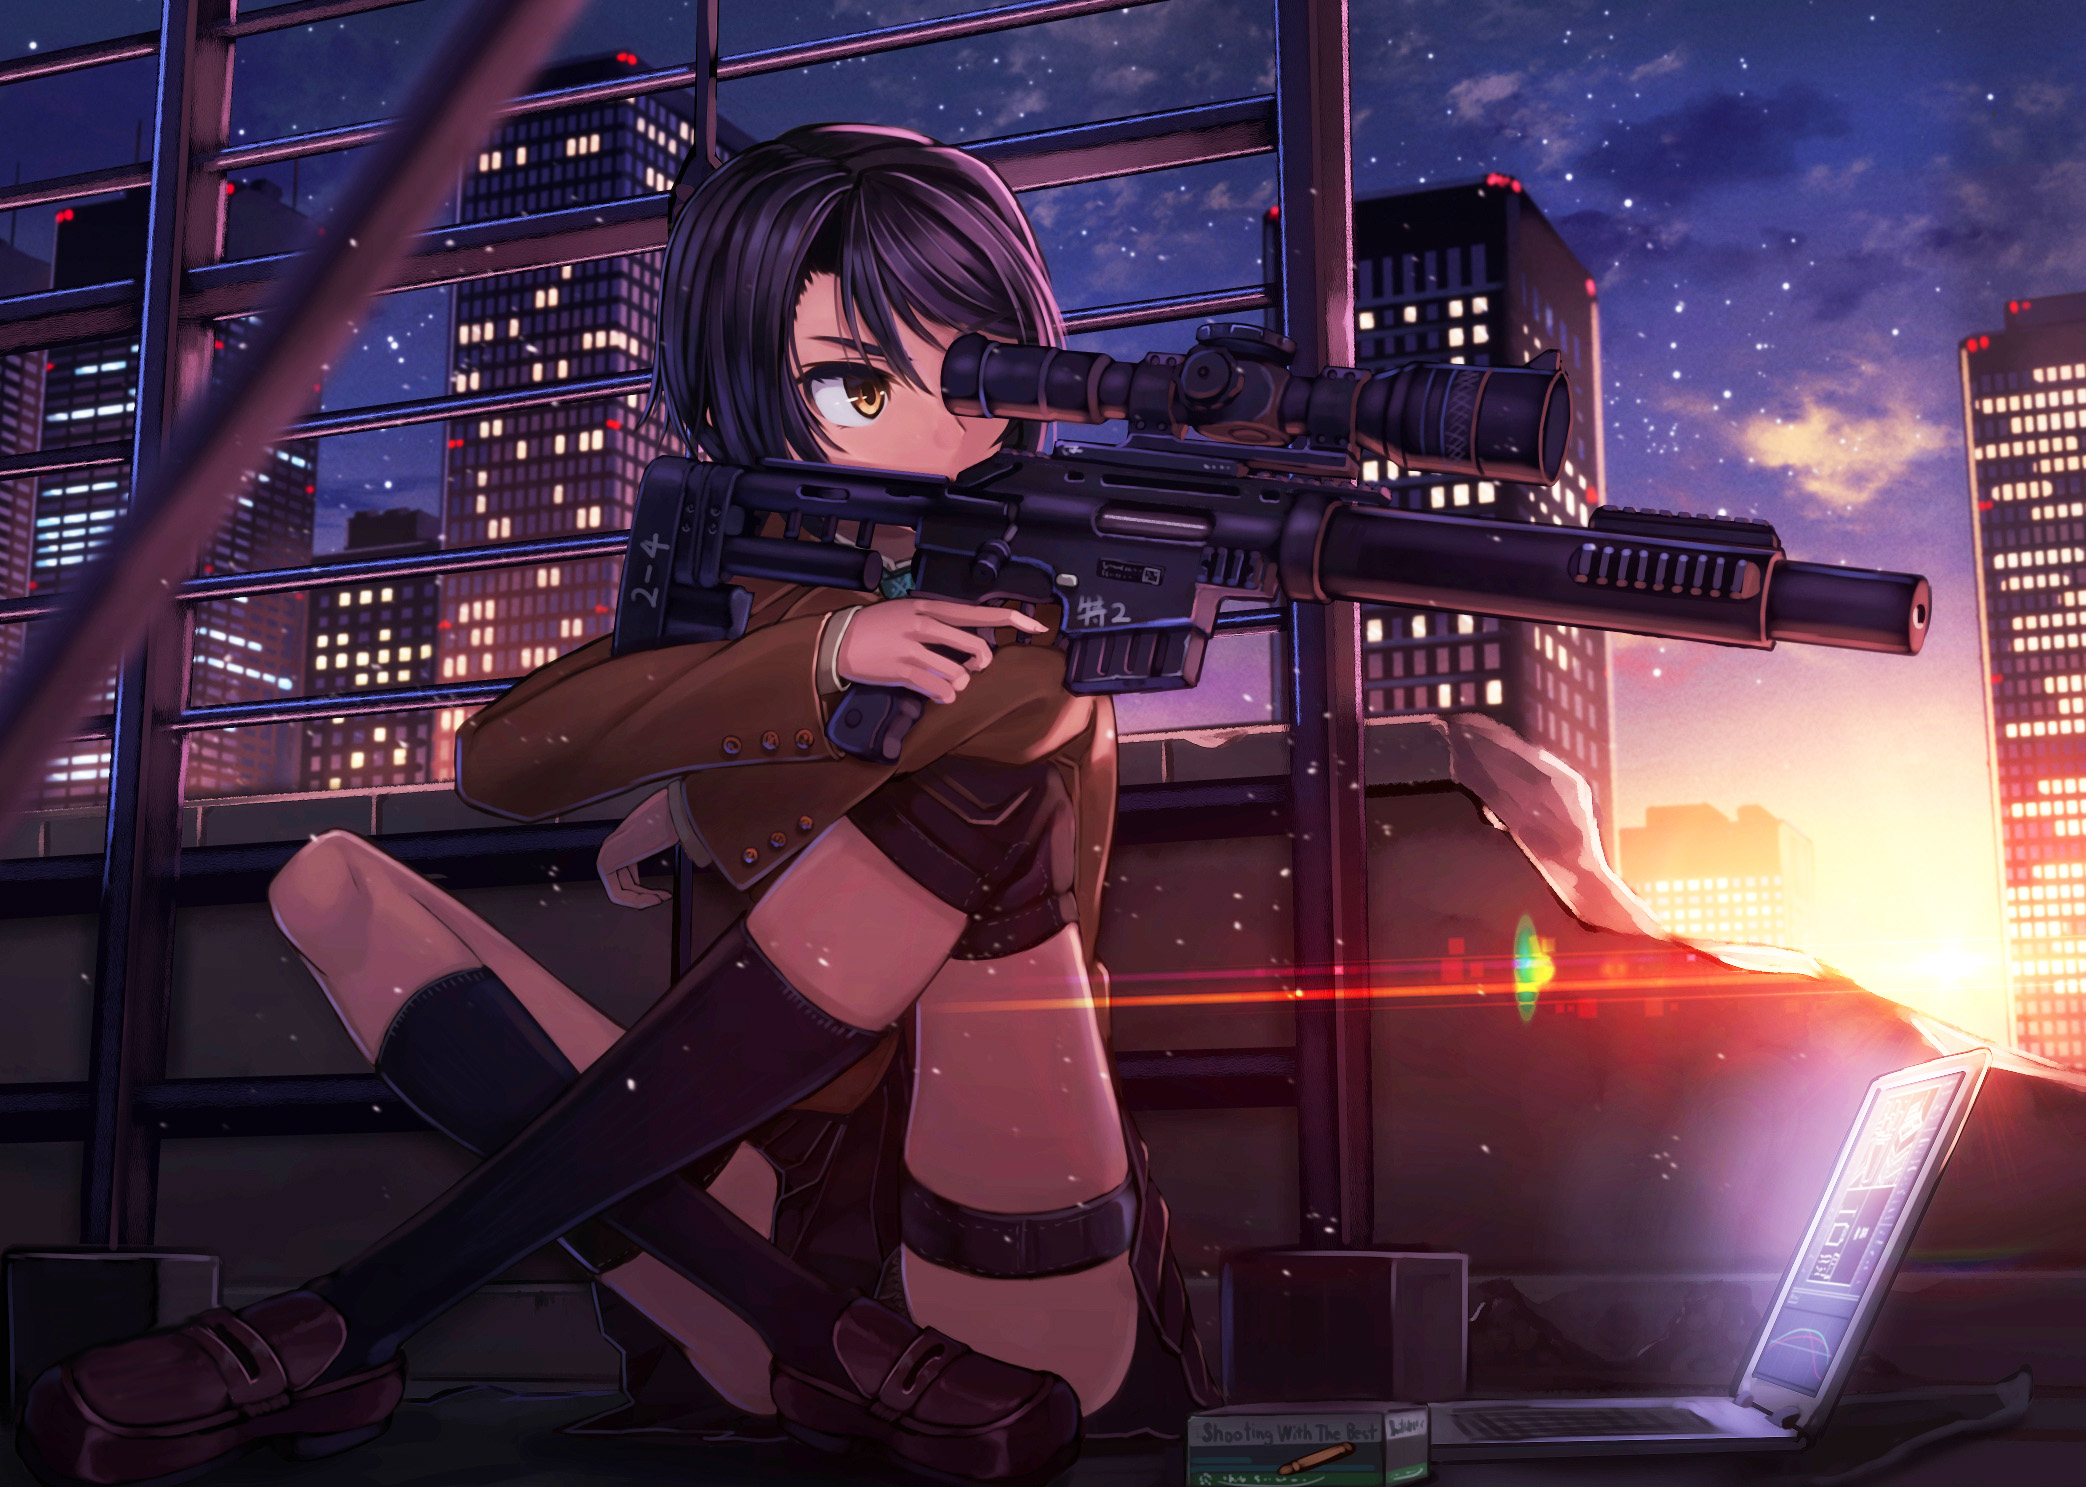 Anime 2086x1487 anime anime girls city skyscraper girls with guns sniper rifle dusk aiming rifles thighs legs sitting laptop yellow eyes dark hair